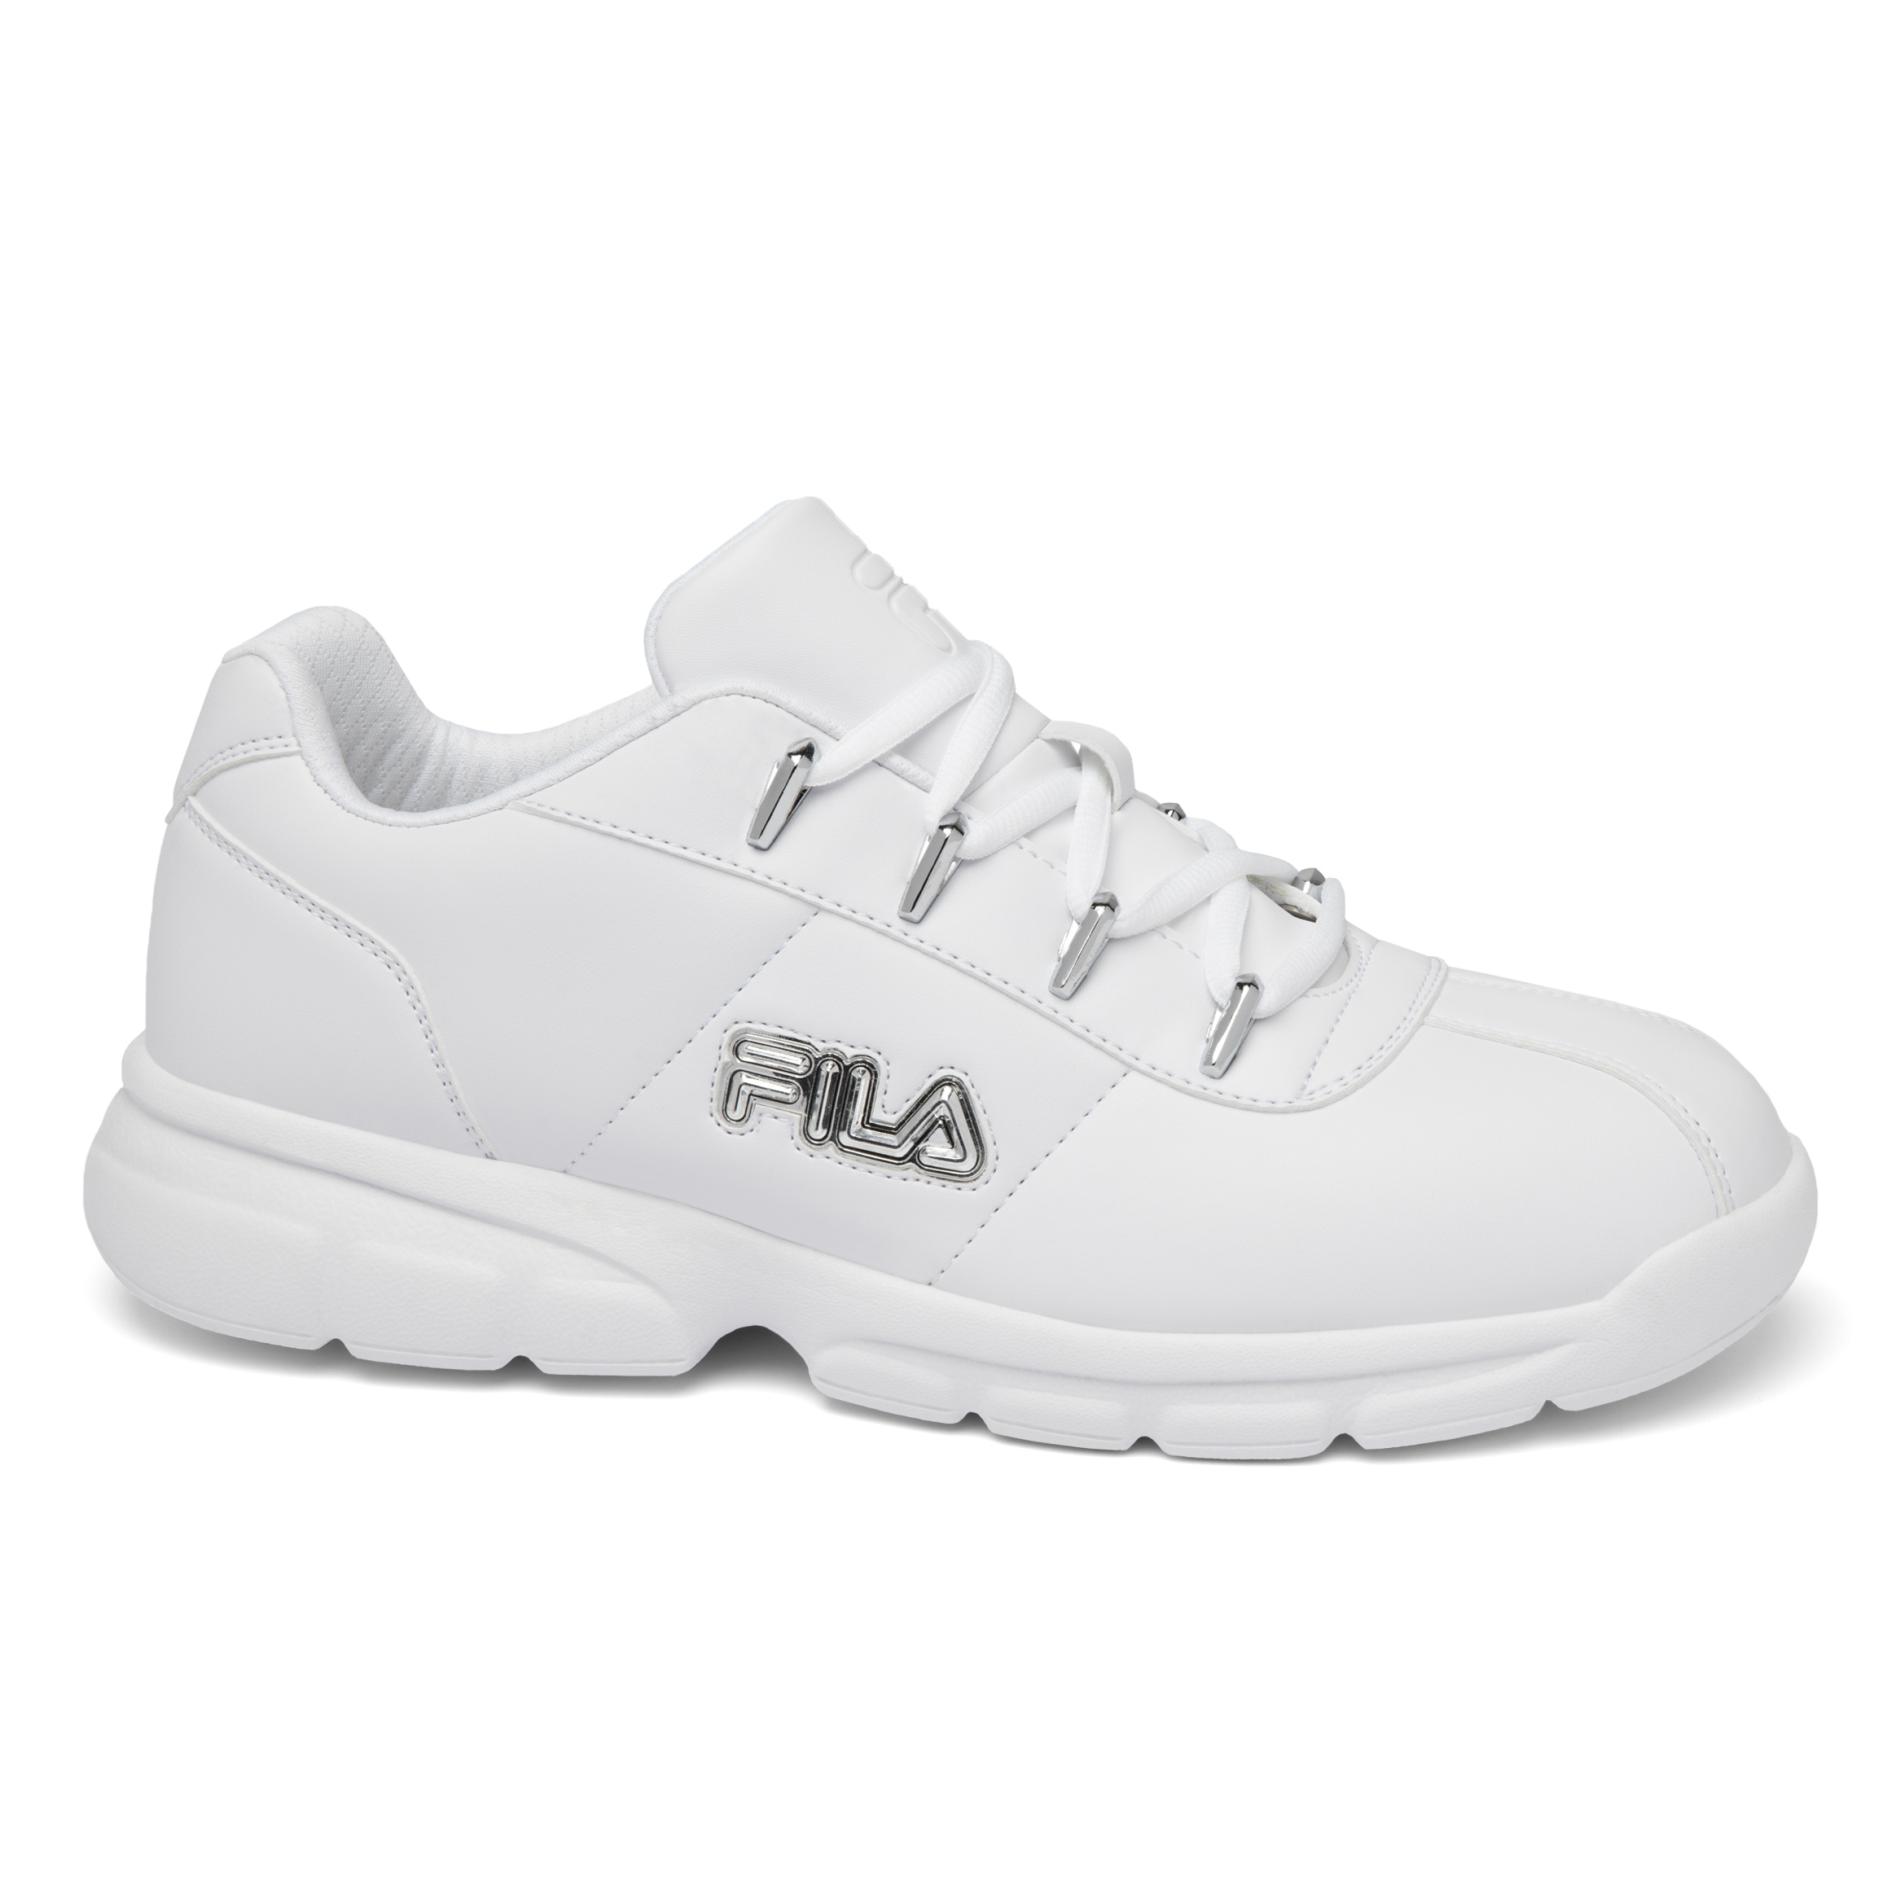 Fila Men's Entrance Athletic Shoe - White